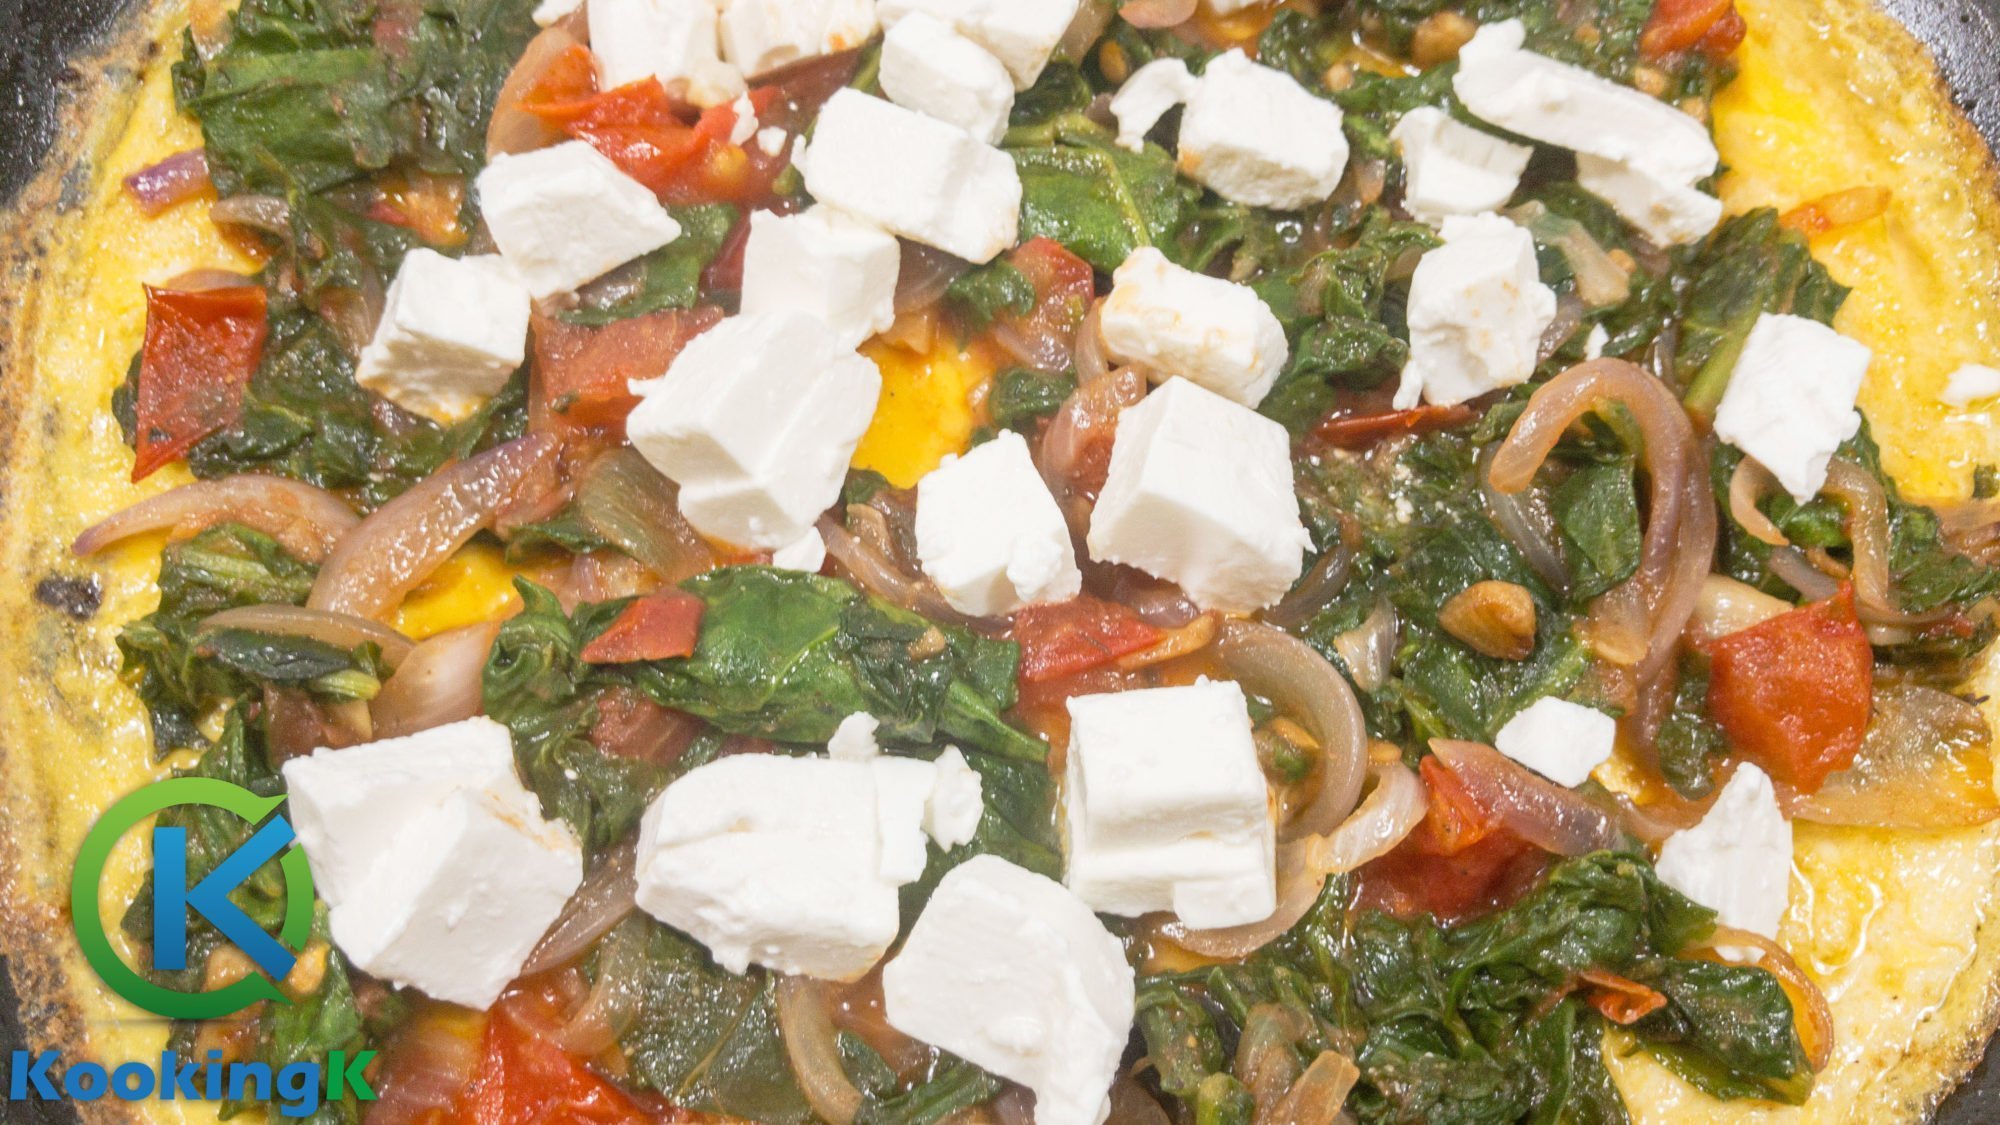 Spinach and Feta Cheese Omelette Recipe - Healthy Breakfast Idea by KooKingK